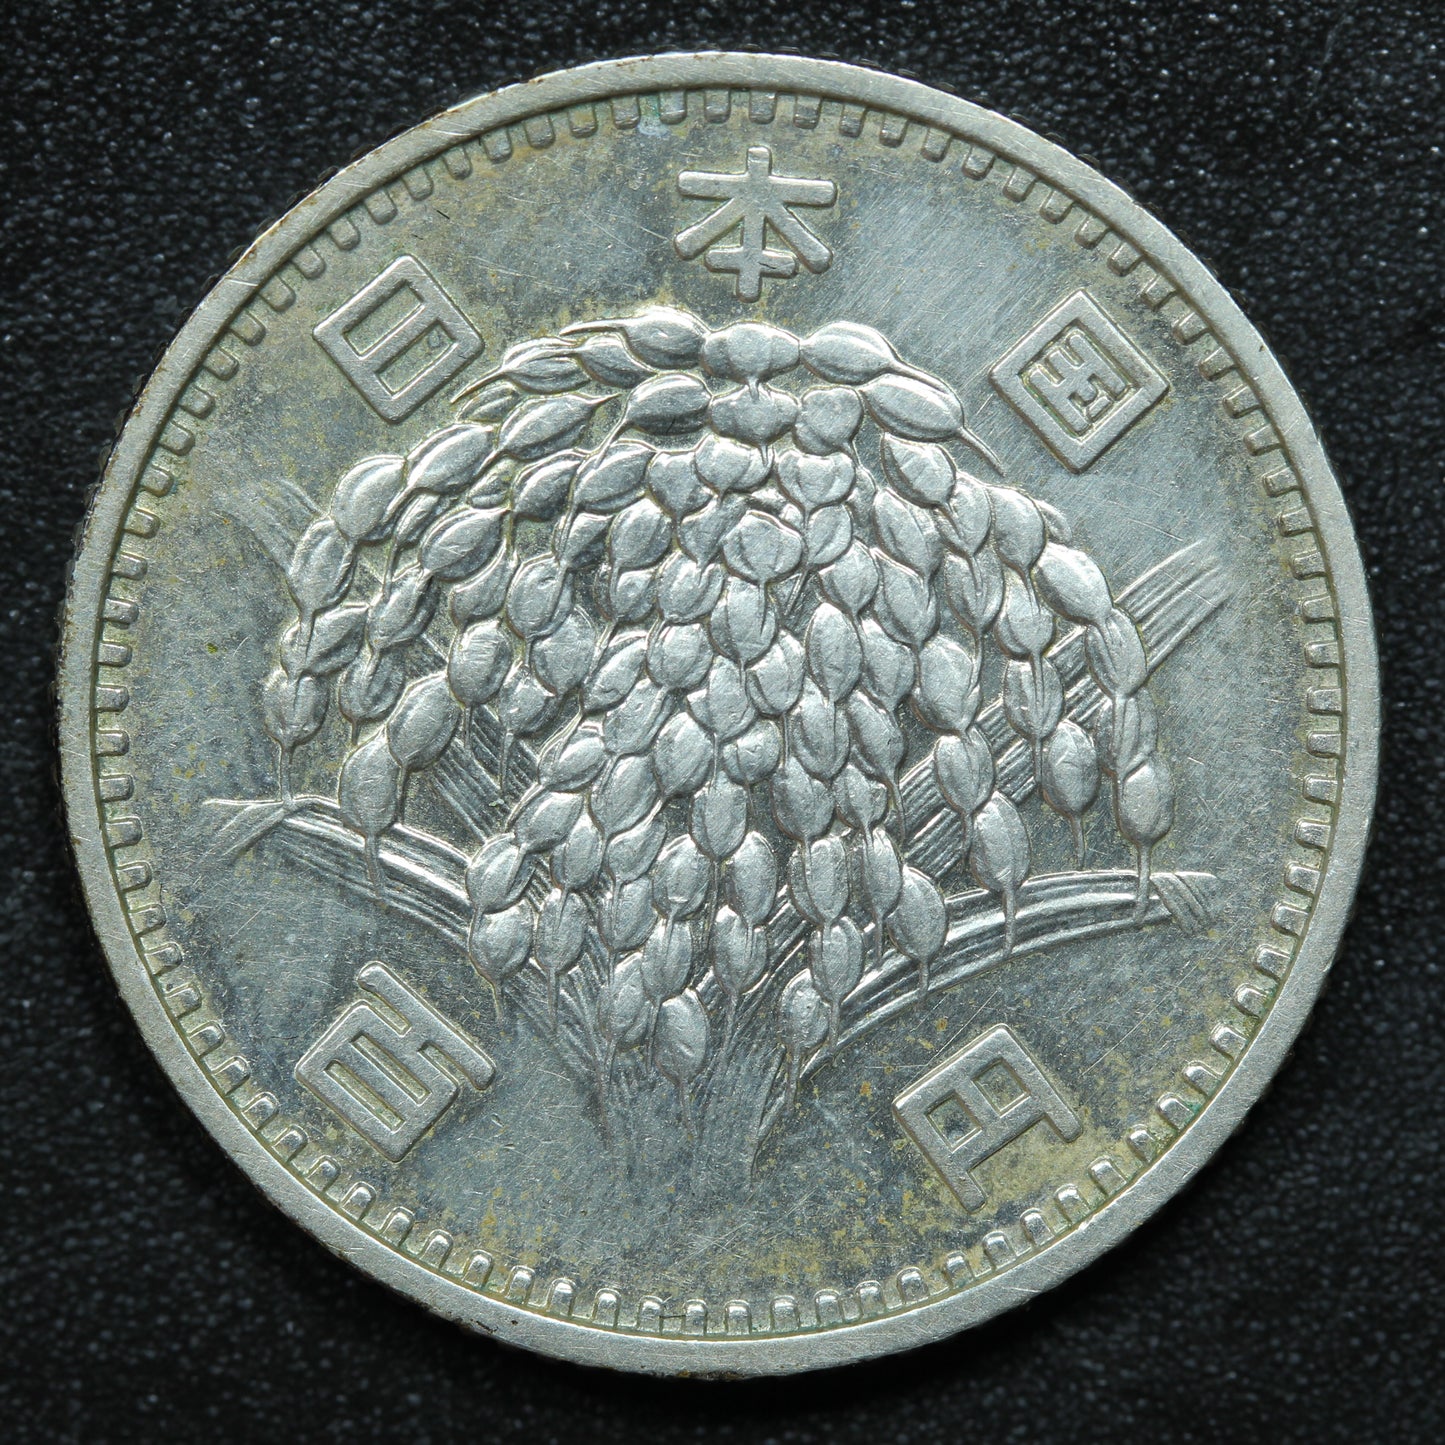 1965 Japan 100 Yen Yr.40 Shōwa - Y# 78 (#3)